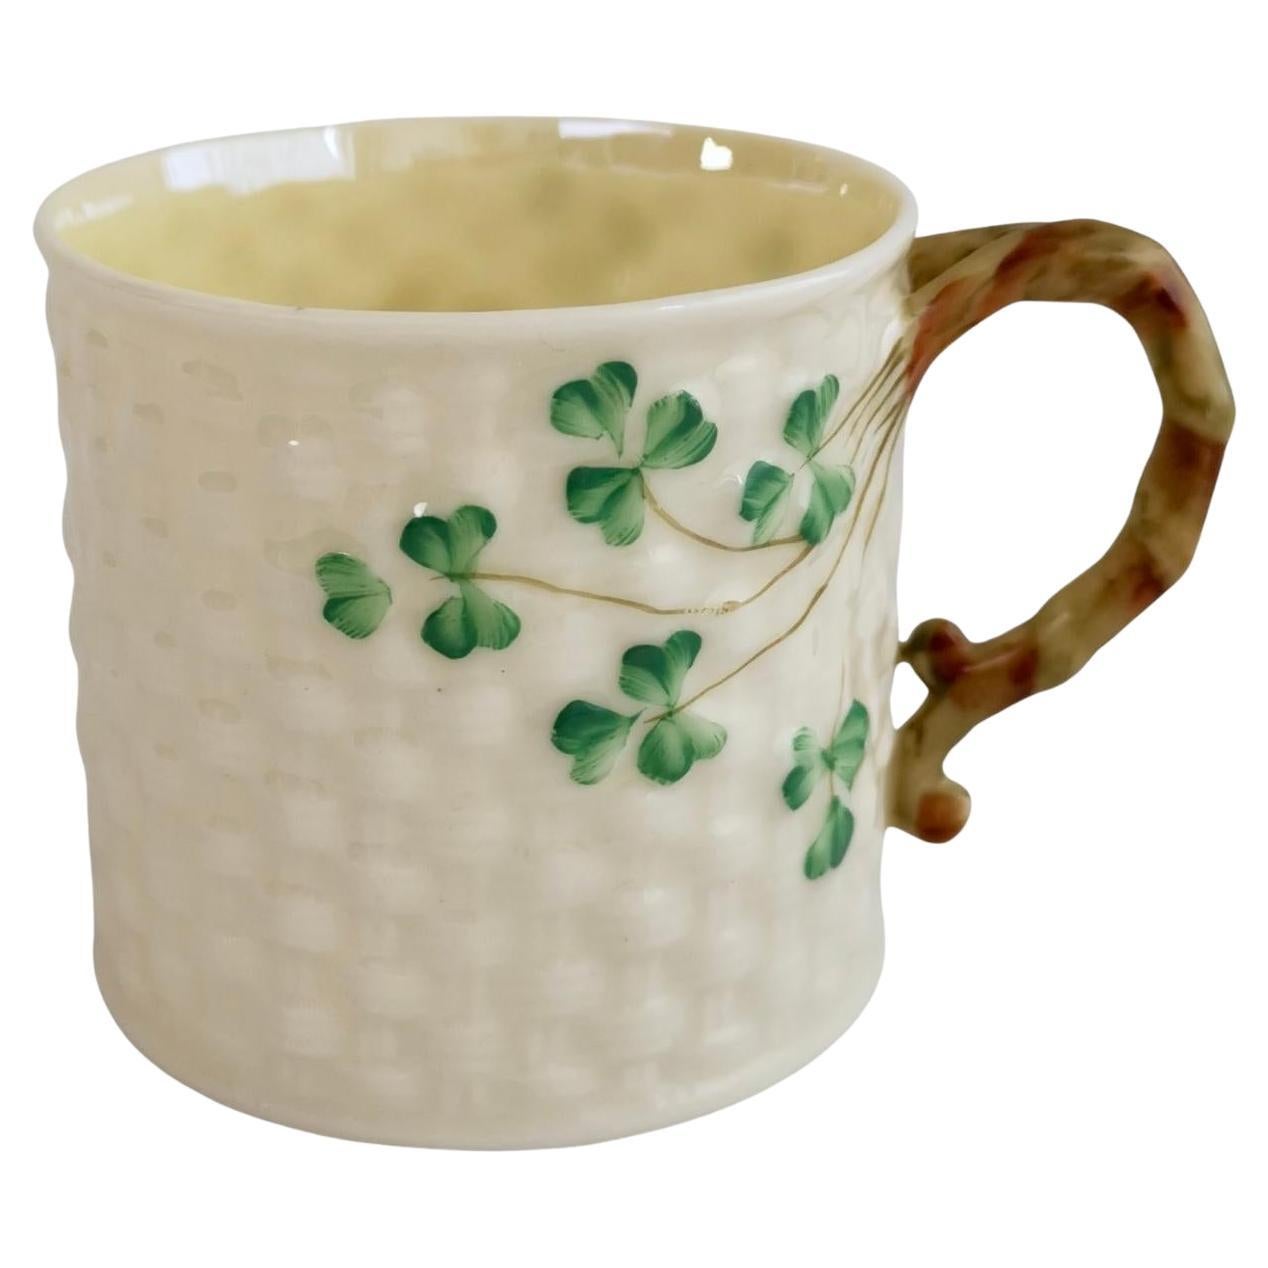 Belleek Small Porcelain Mug, Cream and Green Shamrock Pattern, 1926-1946